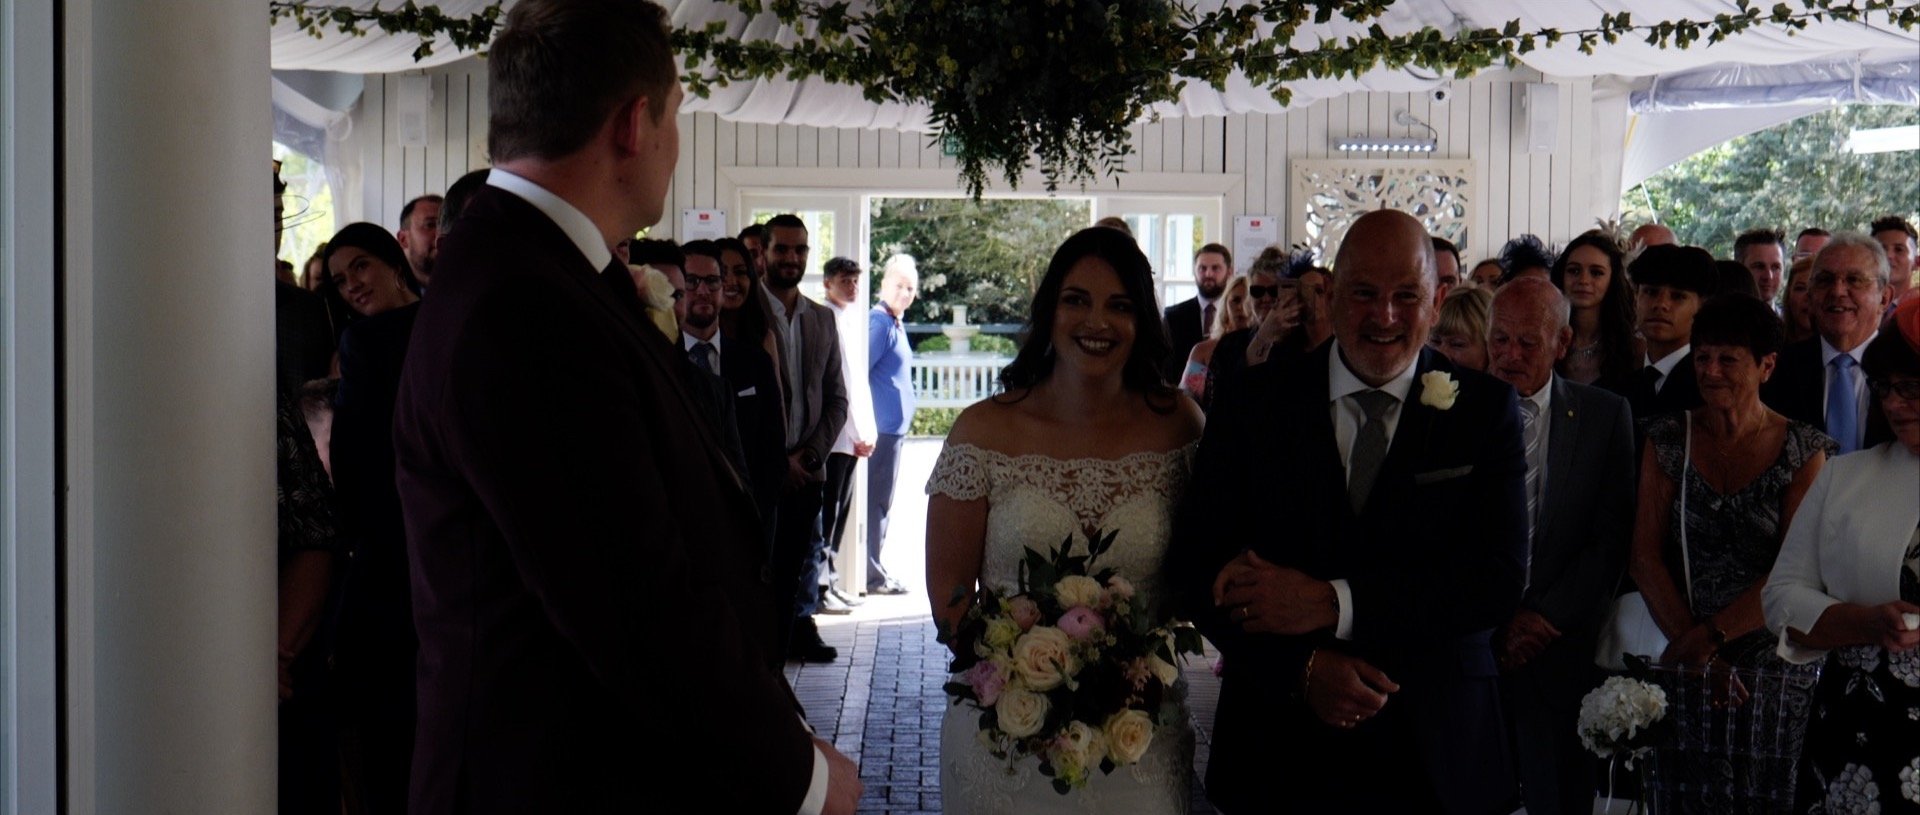 Walking down the aisle at Friern Manor Essex wedding Videos.jpg